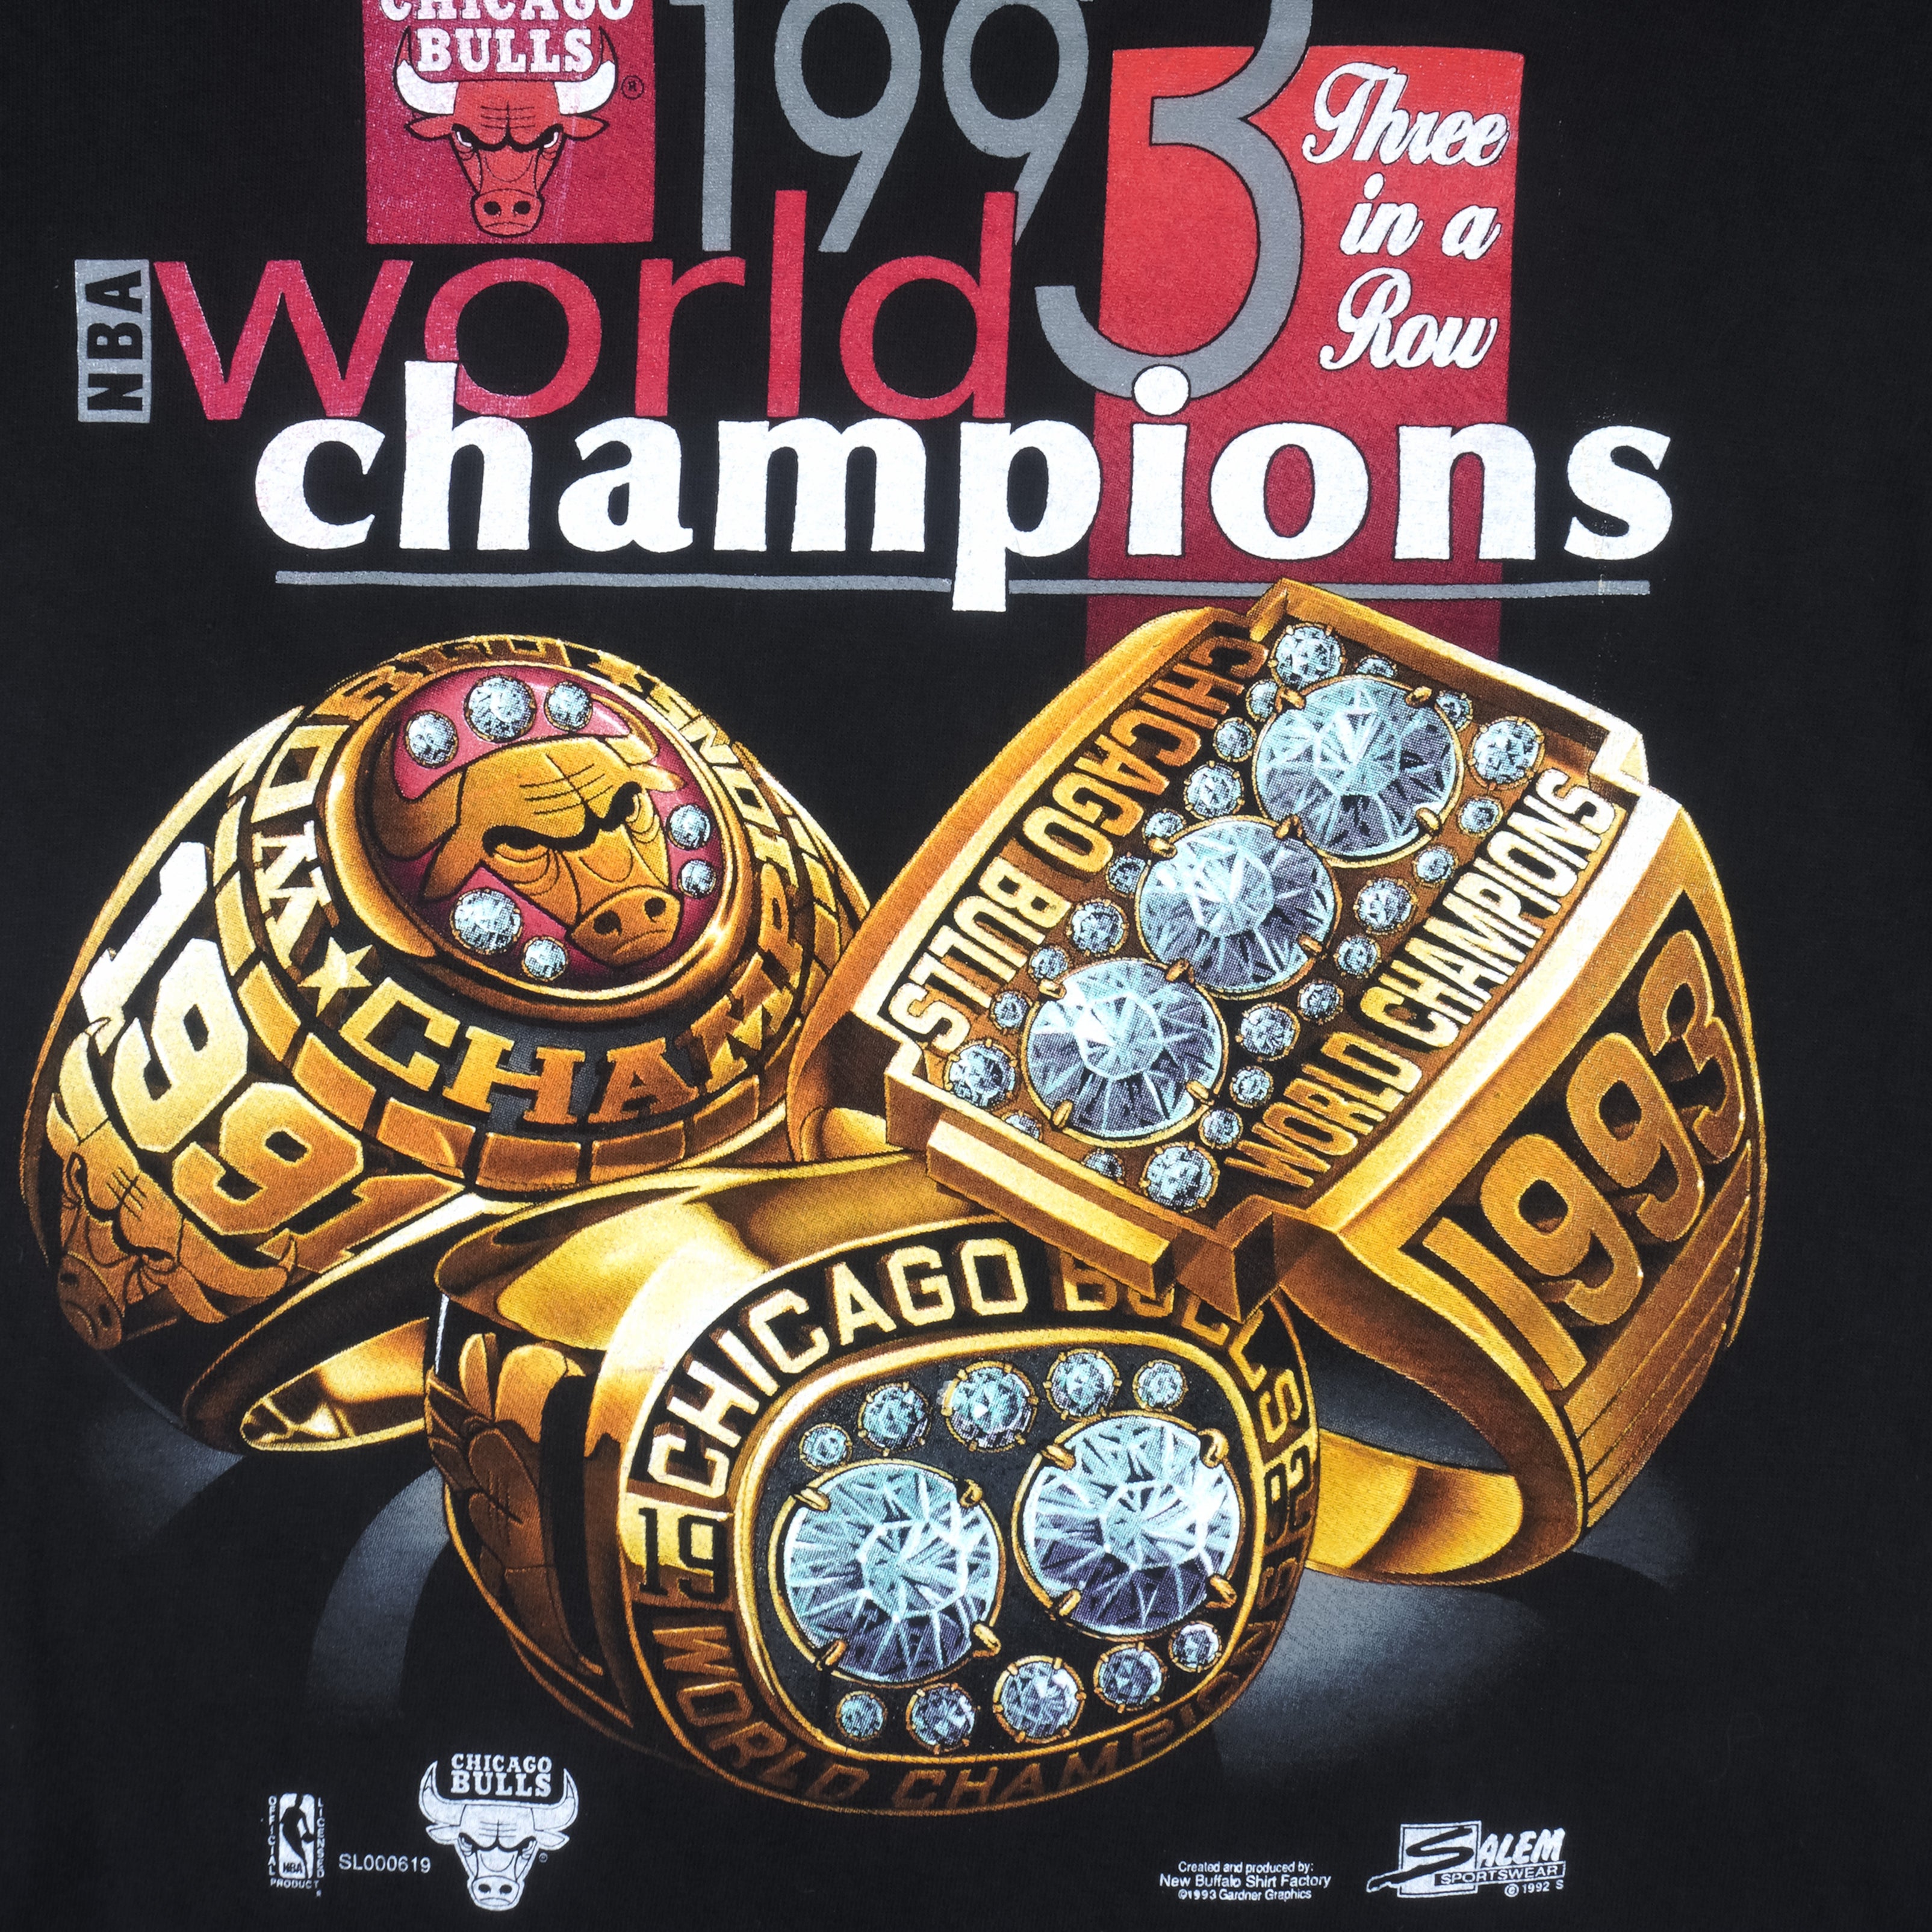 As-is Salem Nba Chicago Bulls 1991 Nba World Champions Big Head